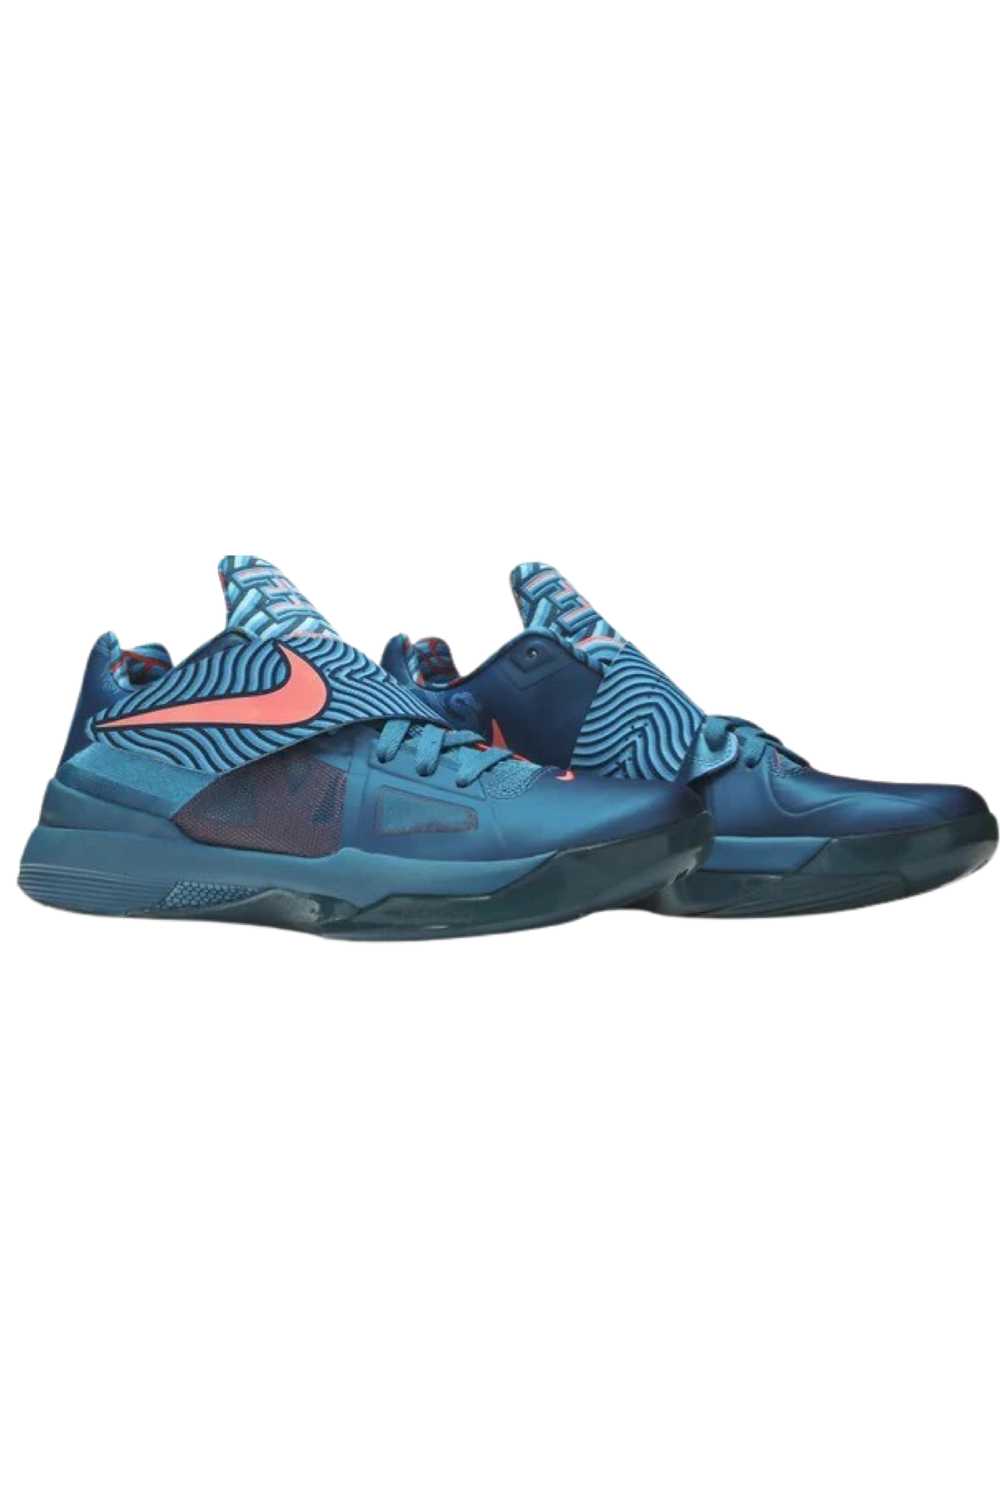 Nike KD4 YOTD (Size 12) - image 3